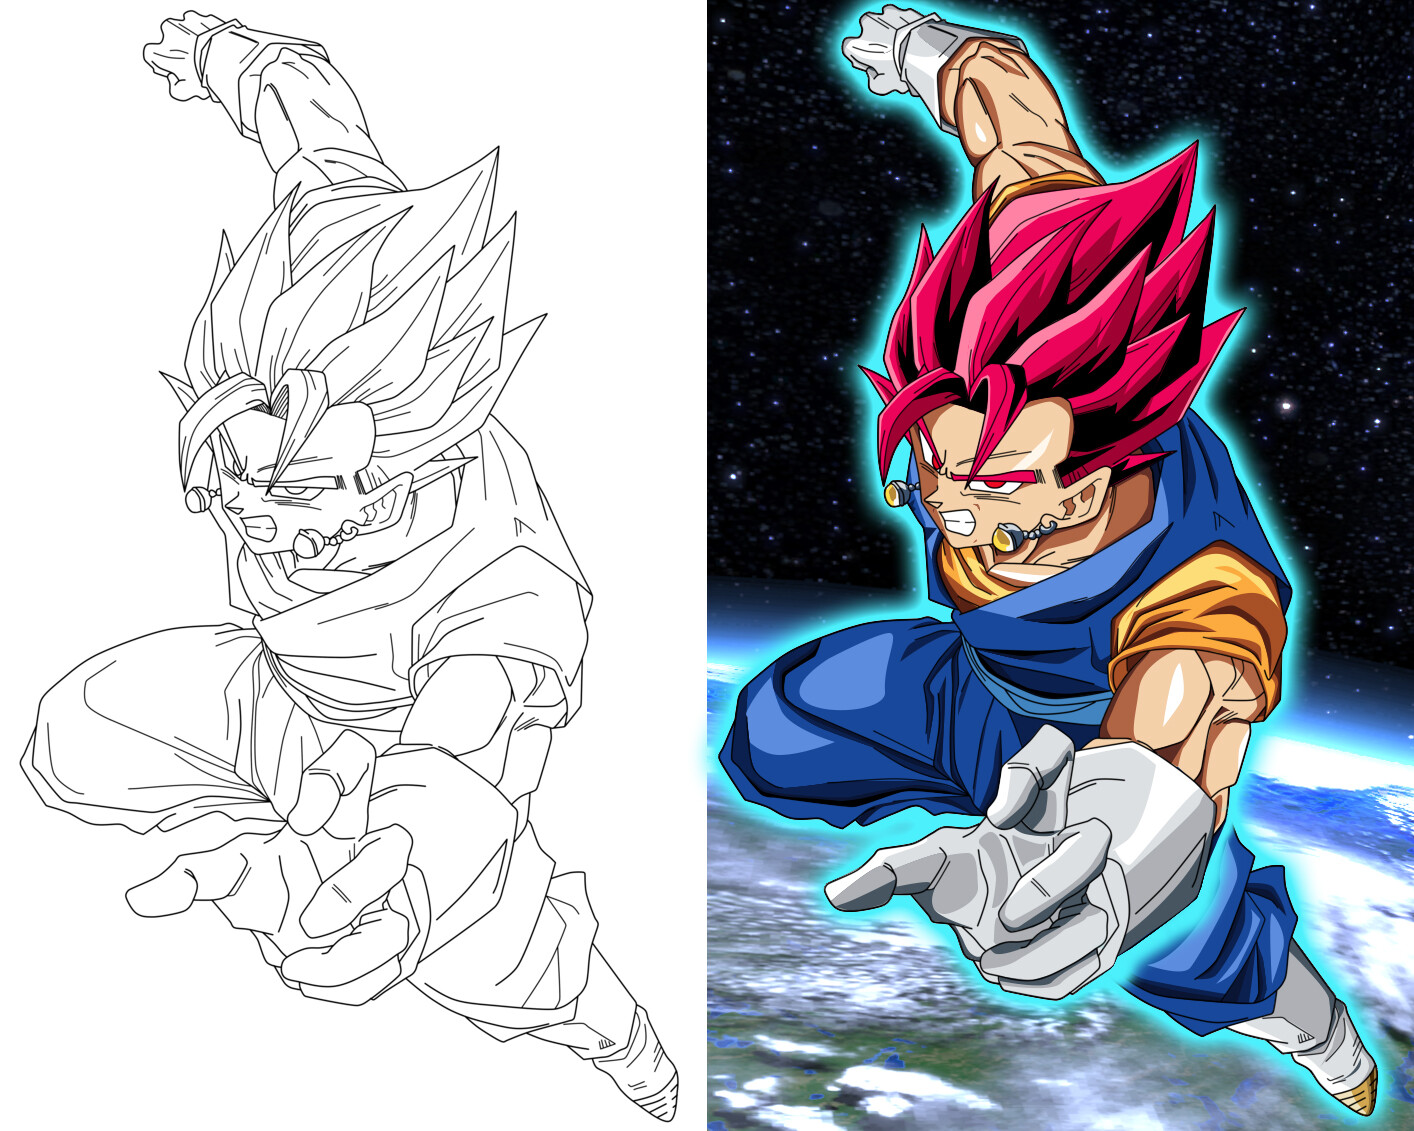 Drawing Goku Super Saiyan God Blue Strength Beyond Gods - YouTube